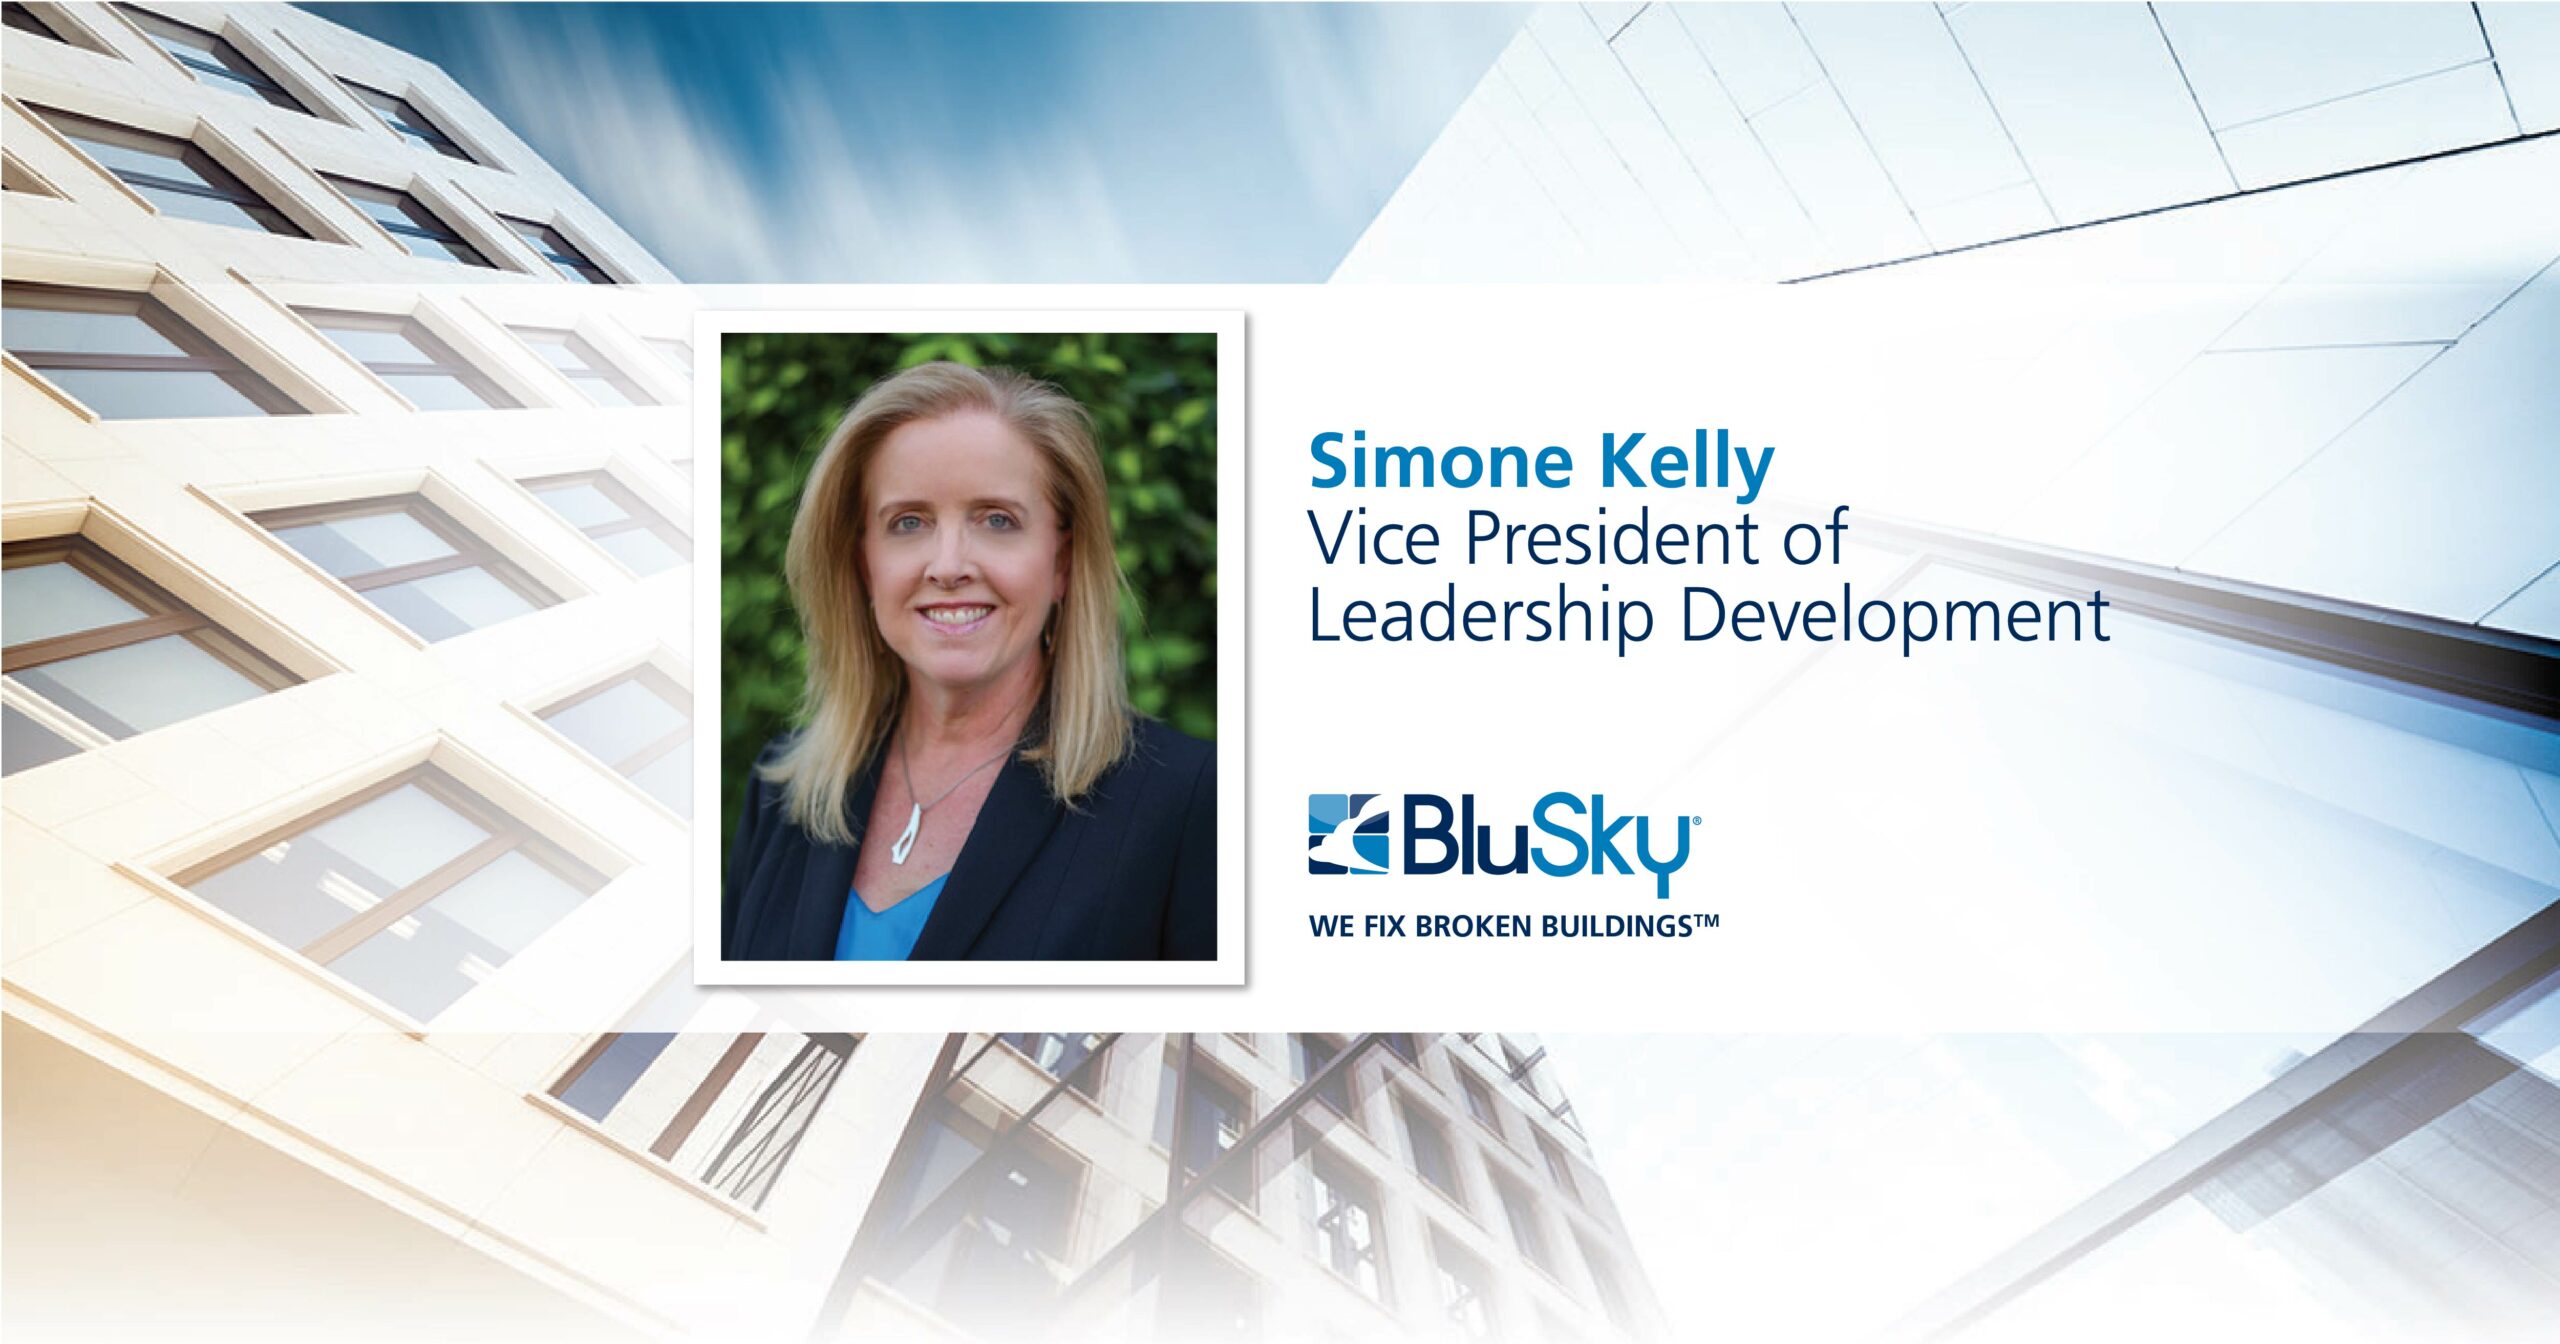 Simone Kelly BluSky VP of Leadership Development